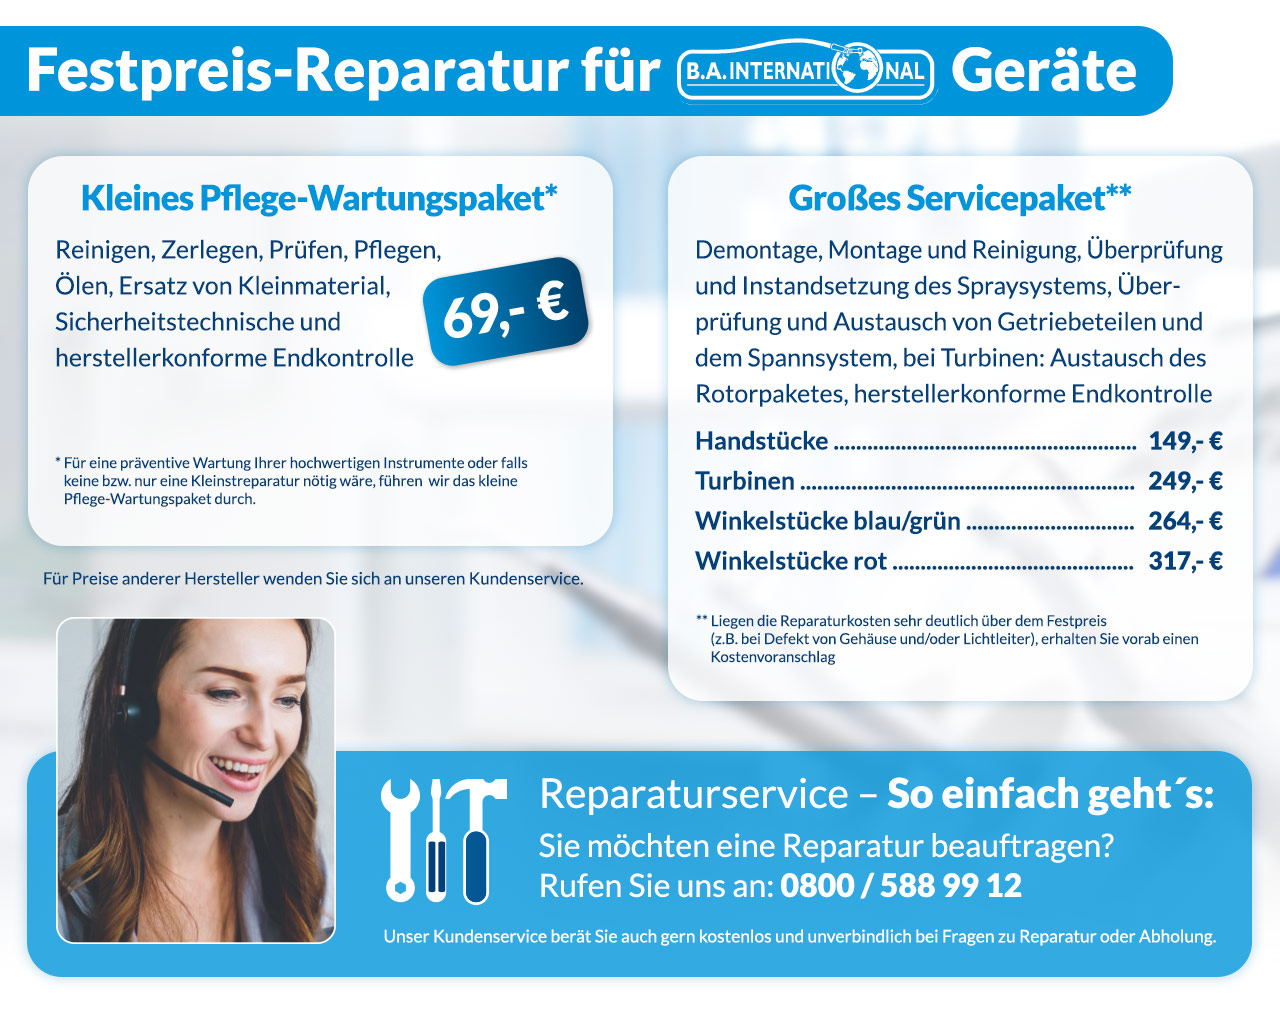 Reparaturservice-zum-Festpreis-nordenta.de.jpg